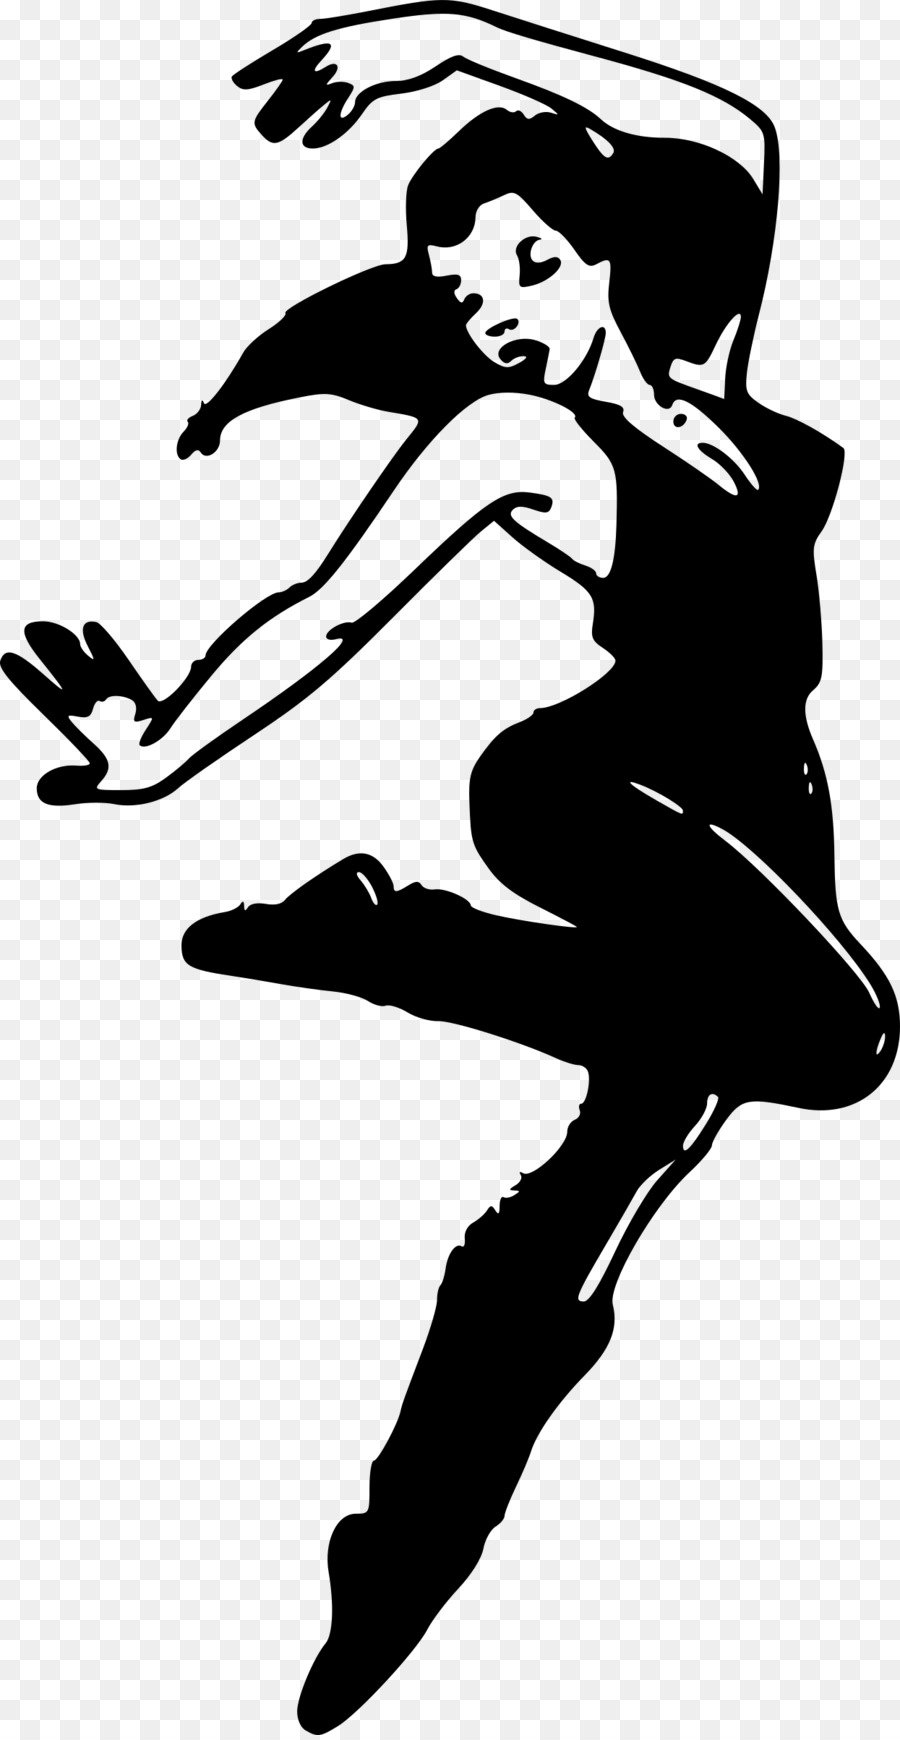 Dance studio Clip art - woman vector png download - 1245*2400 - Free Transparent Dance png Download.